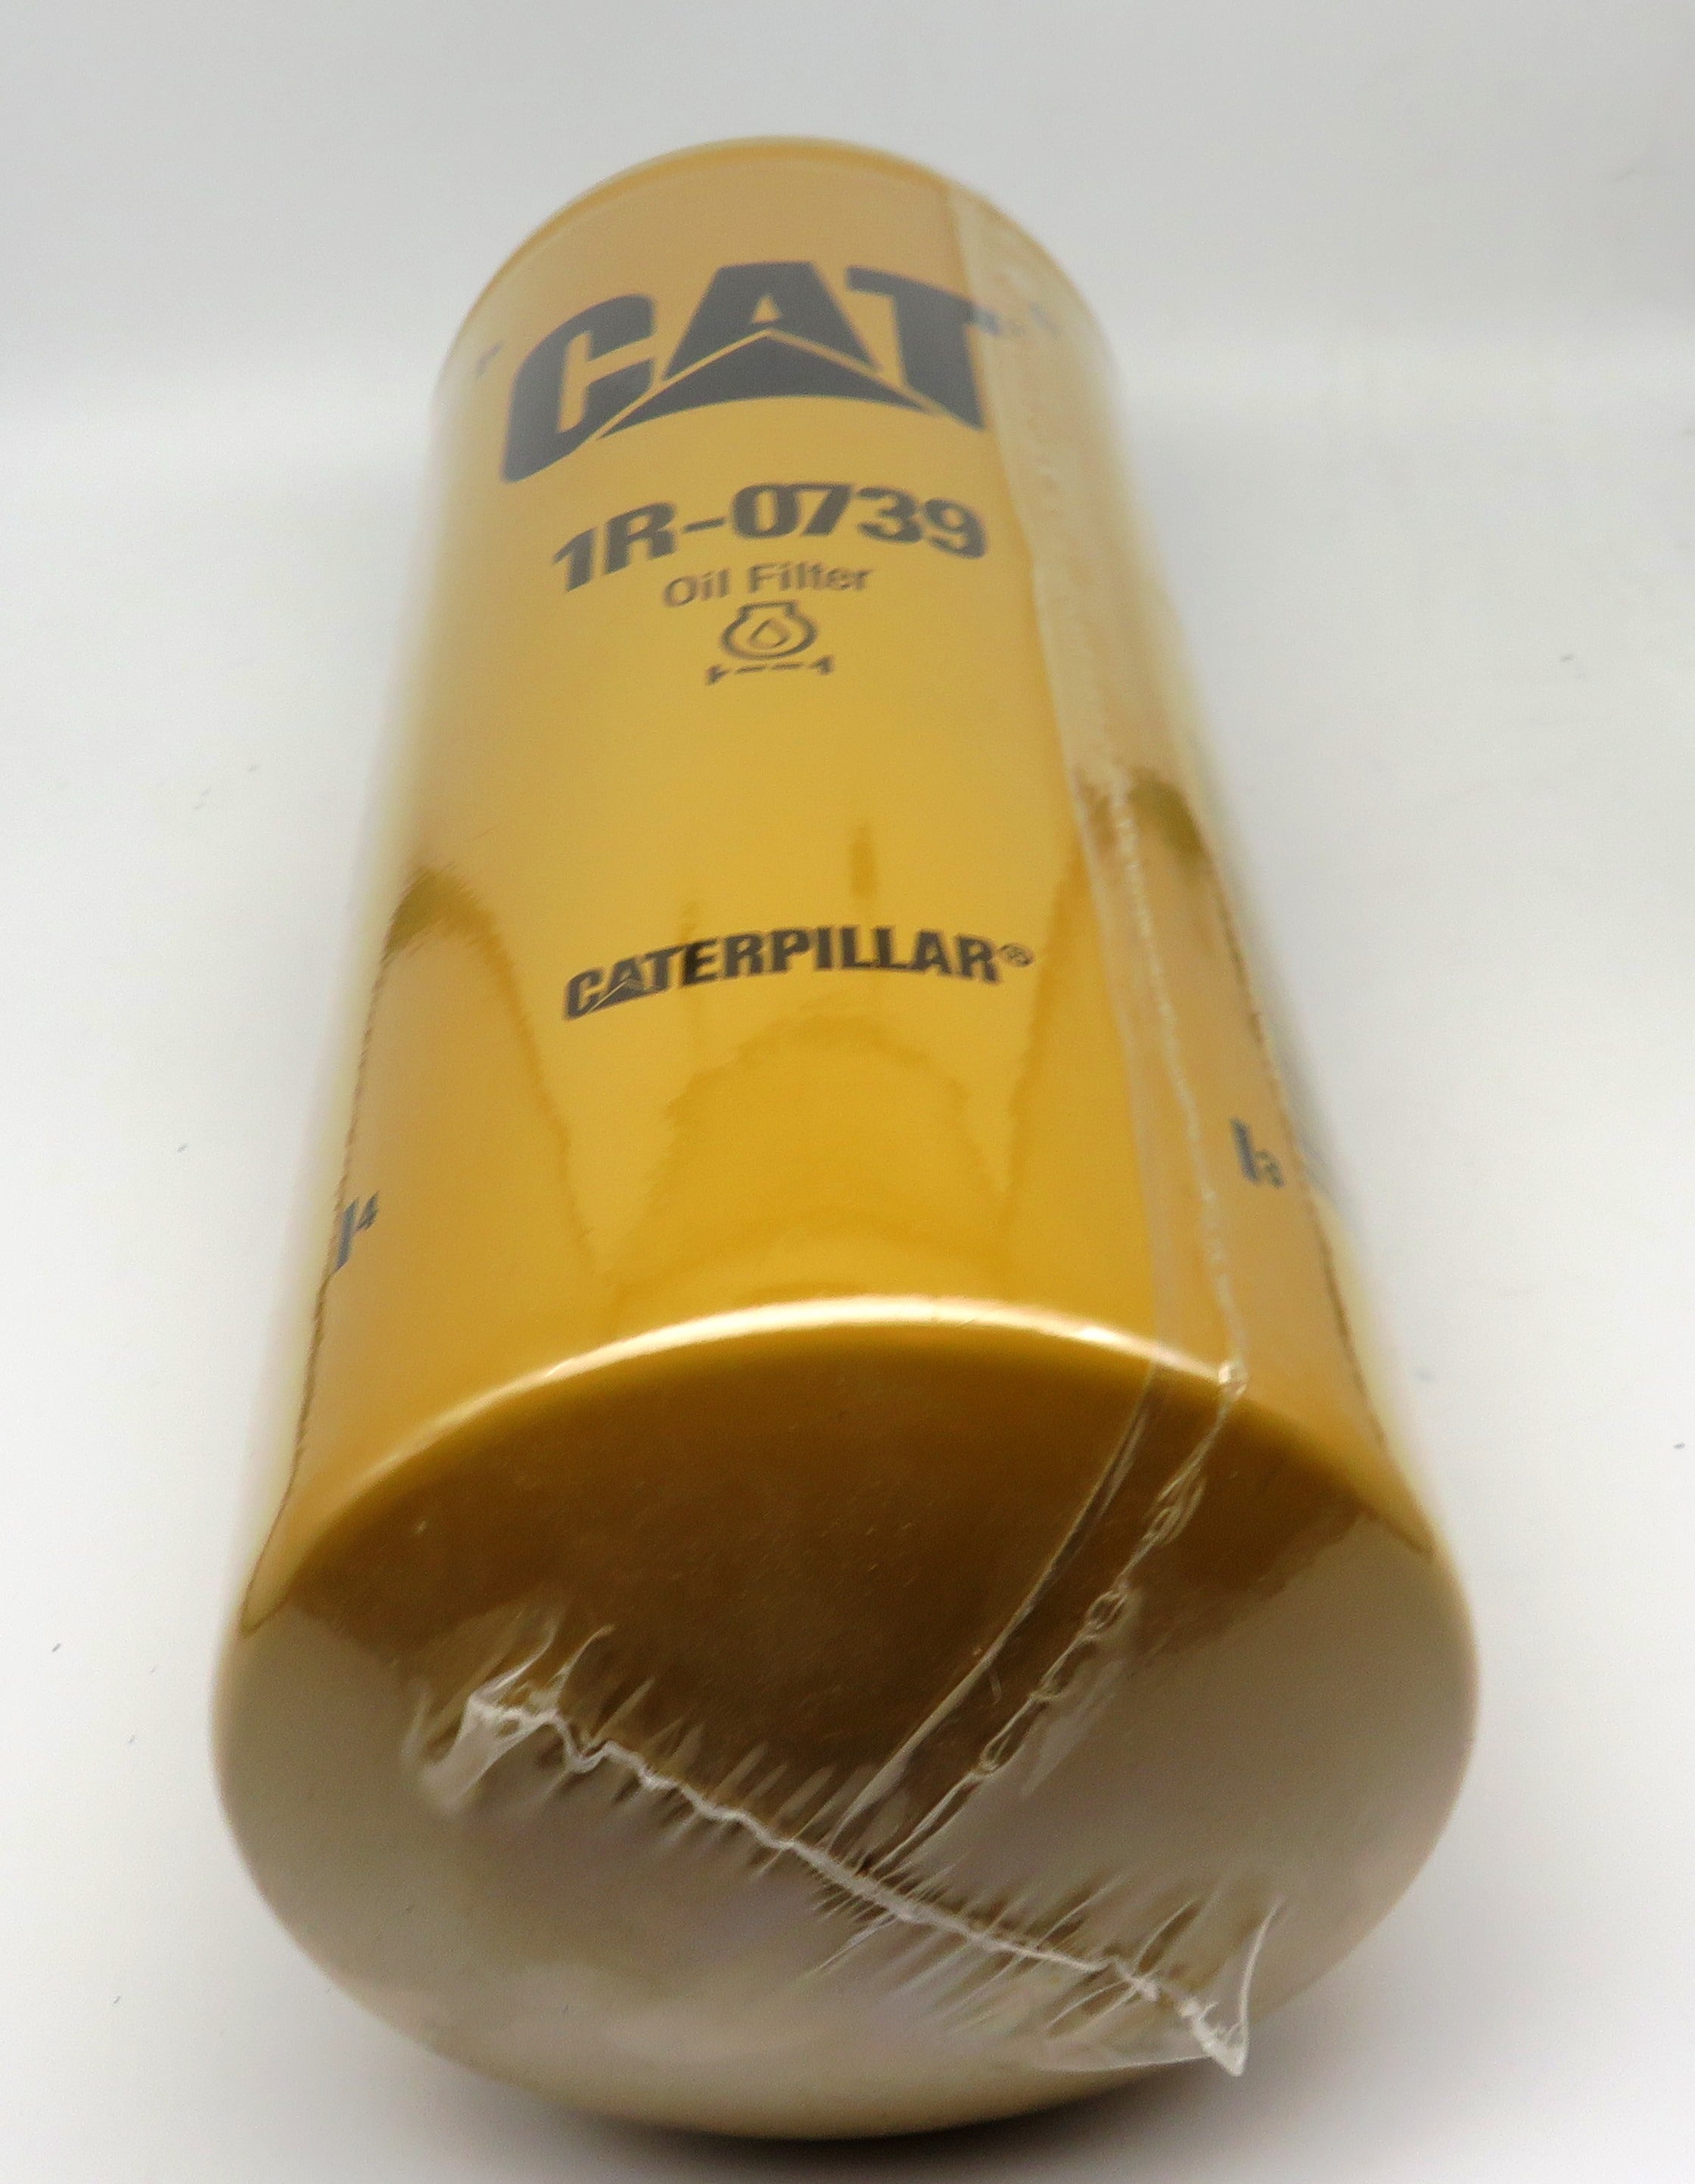 1R0739 Caterpillar CAT Oil Filter 1R-0739